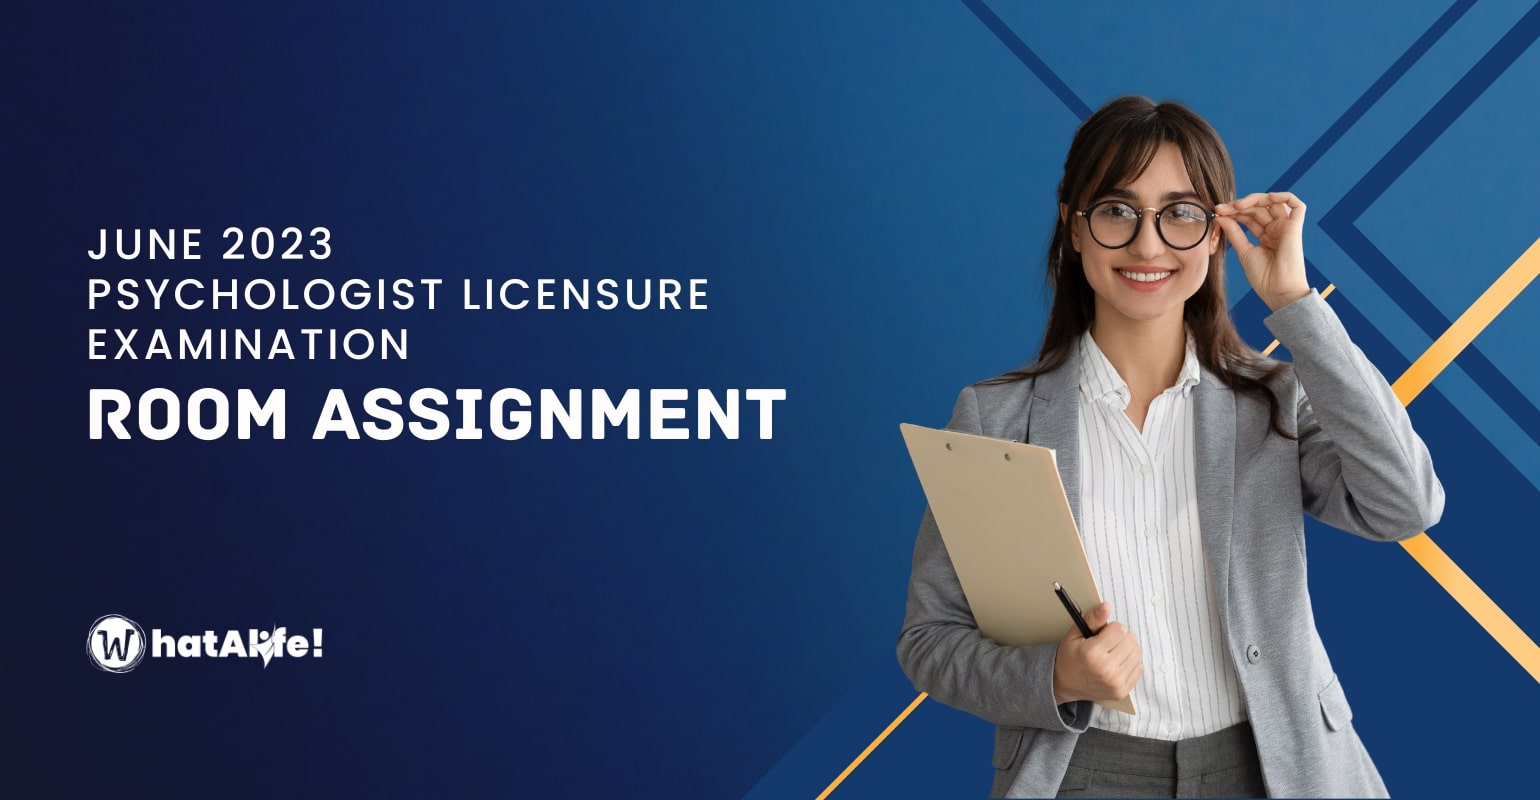 Room Assignment – June 2023 Psychologist Licensure Exams